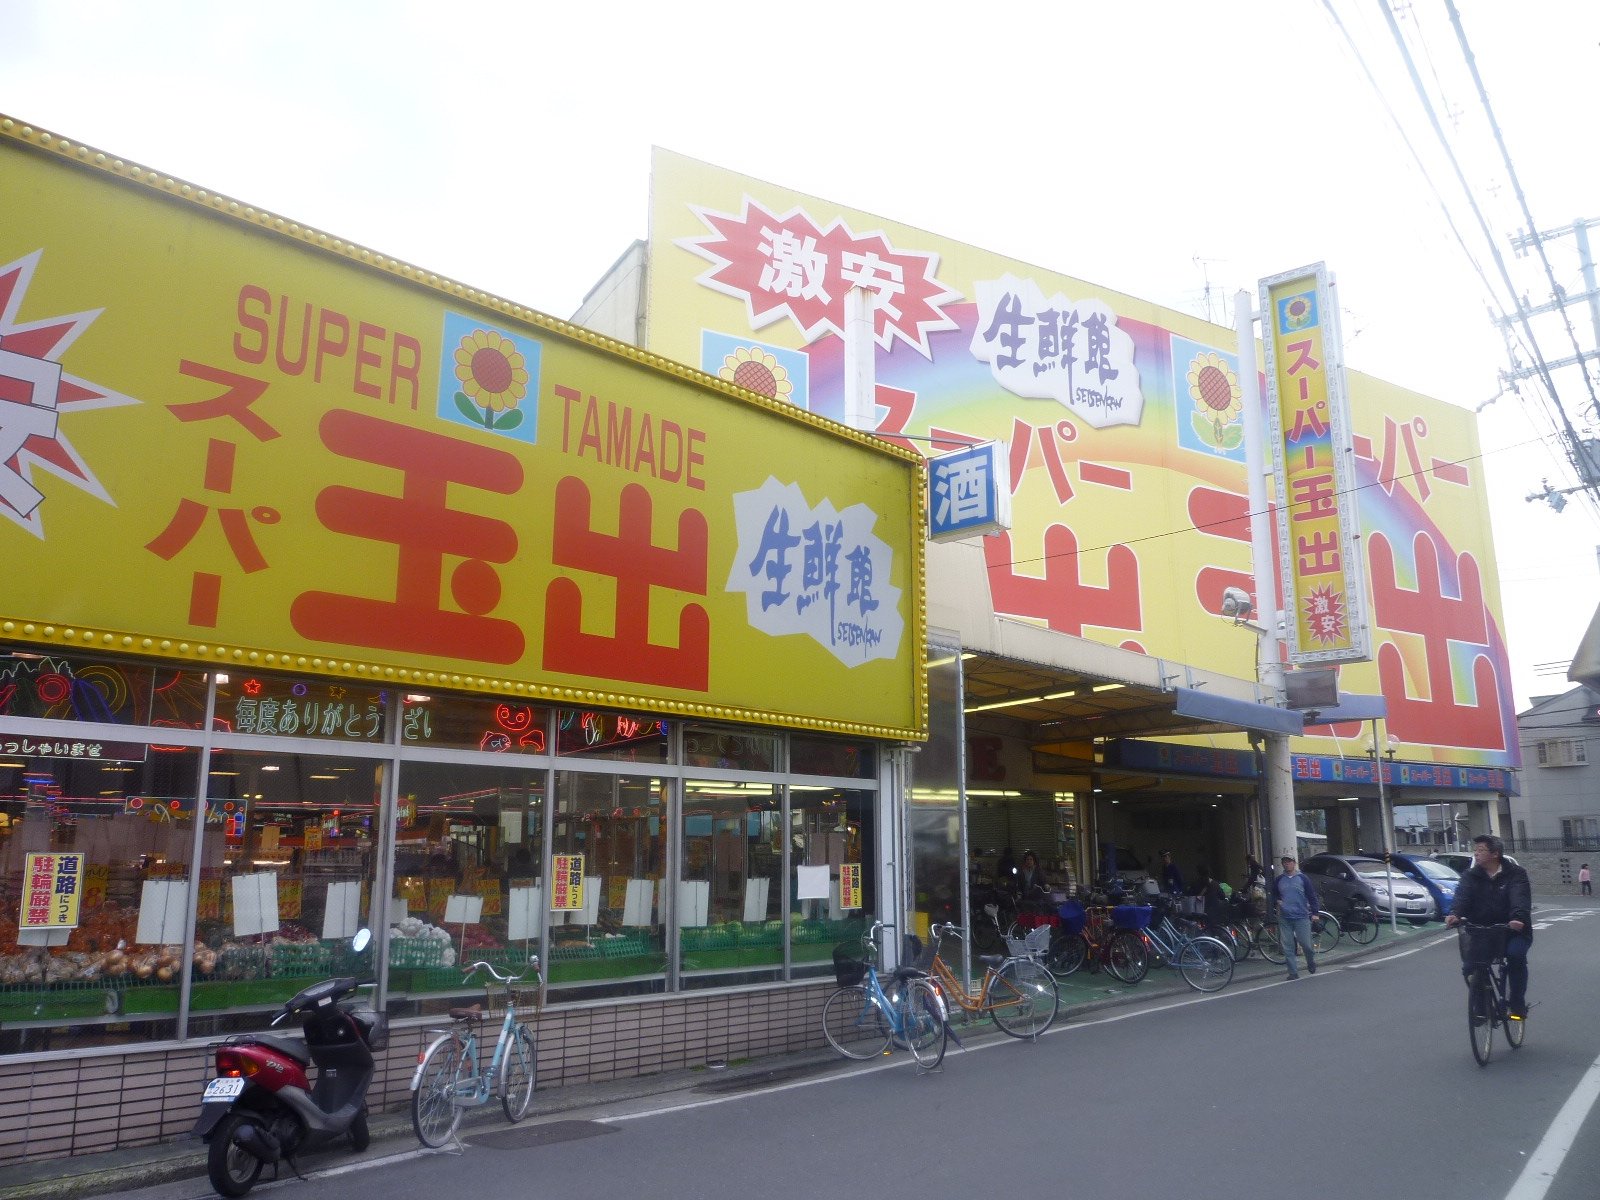 Supermarket. 439m to Super Tamade Yao store (Super)